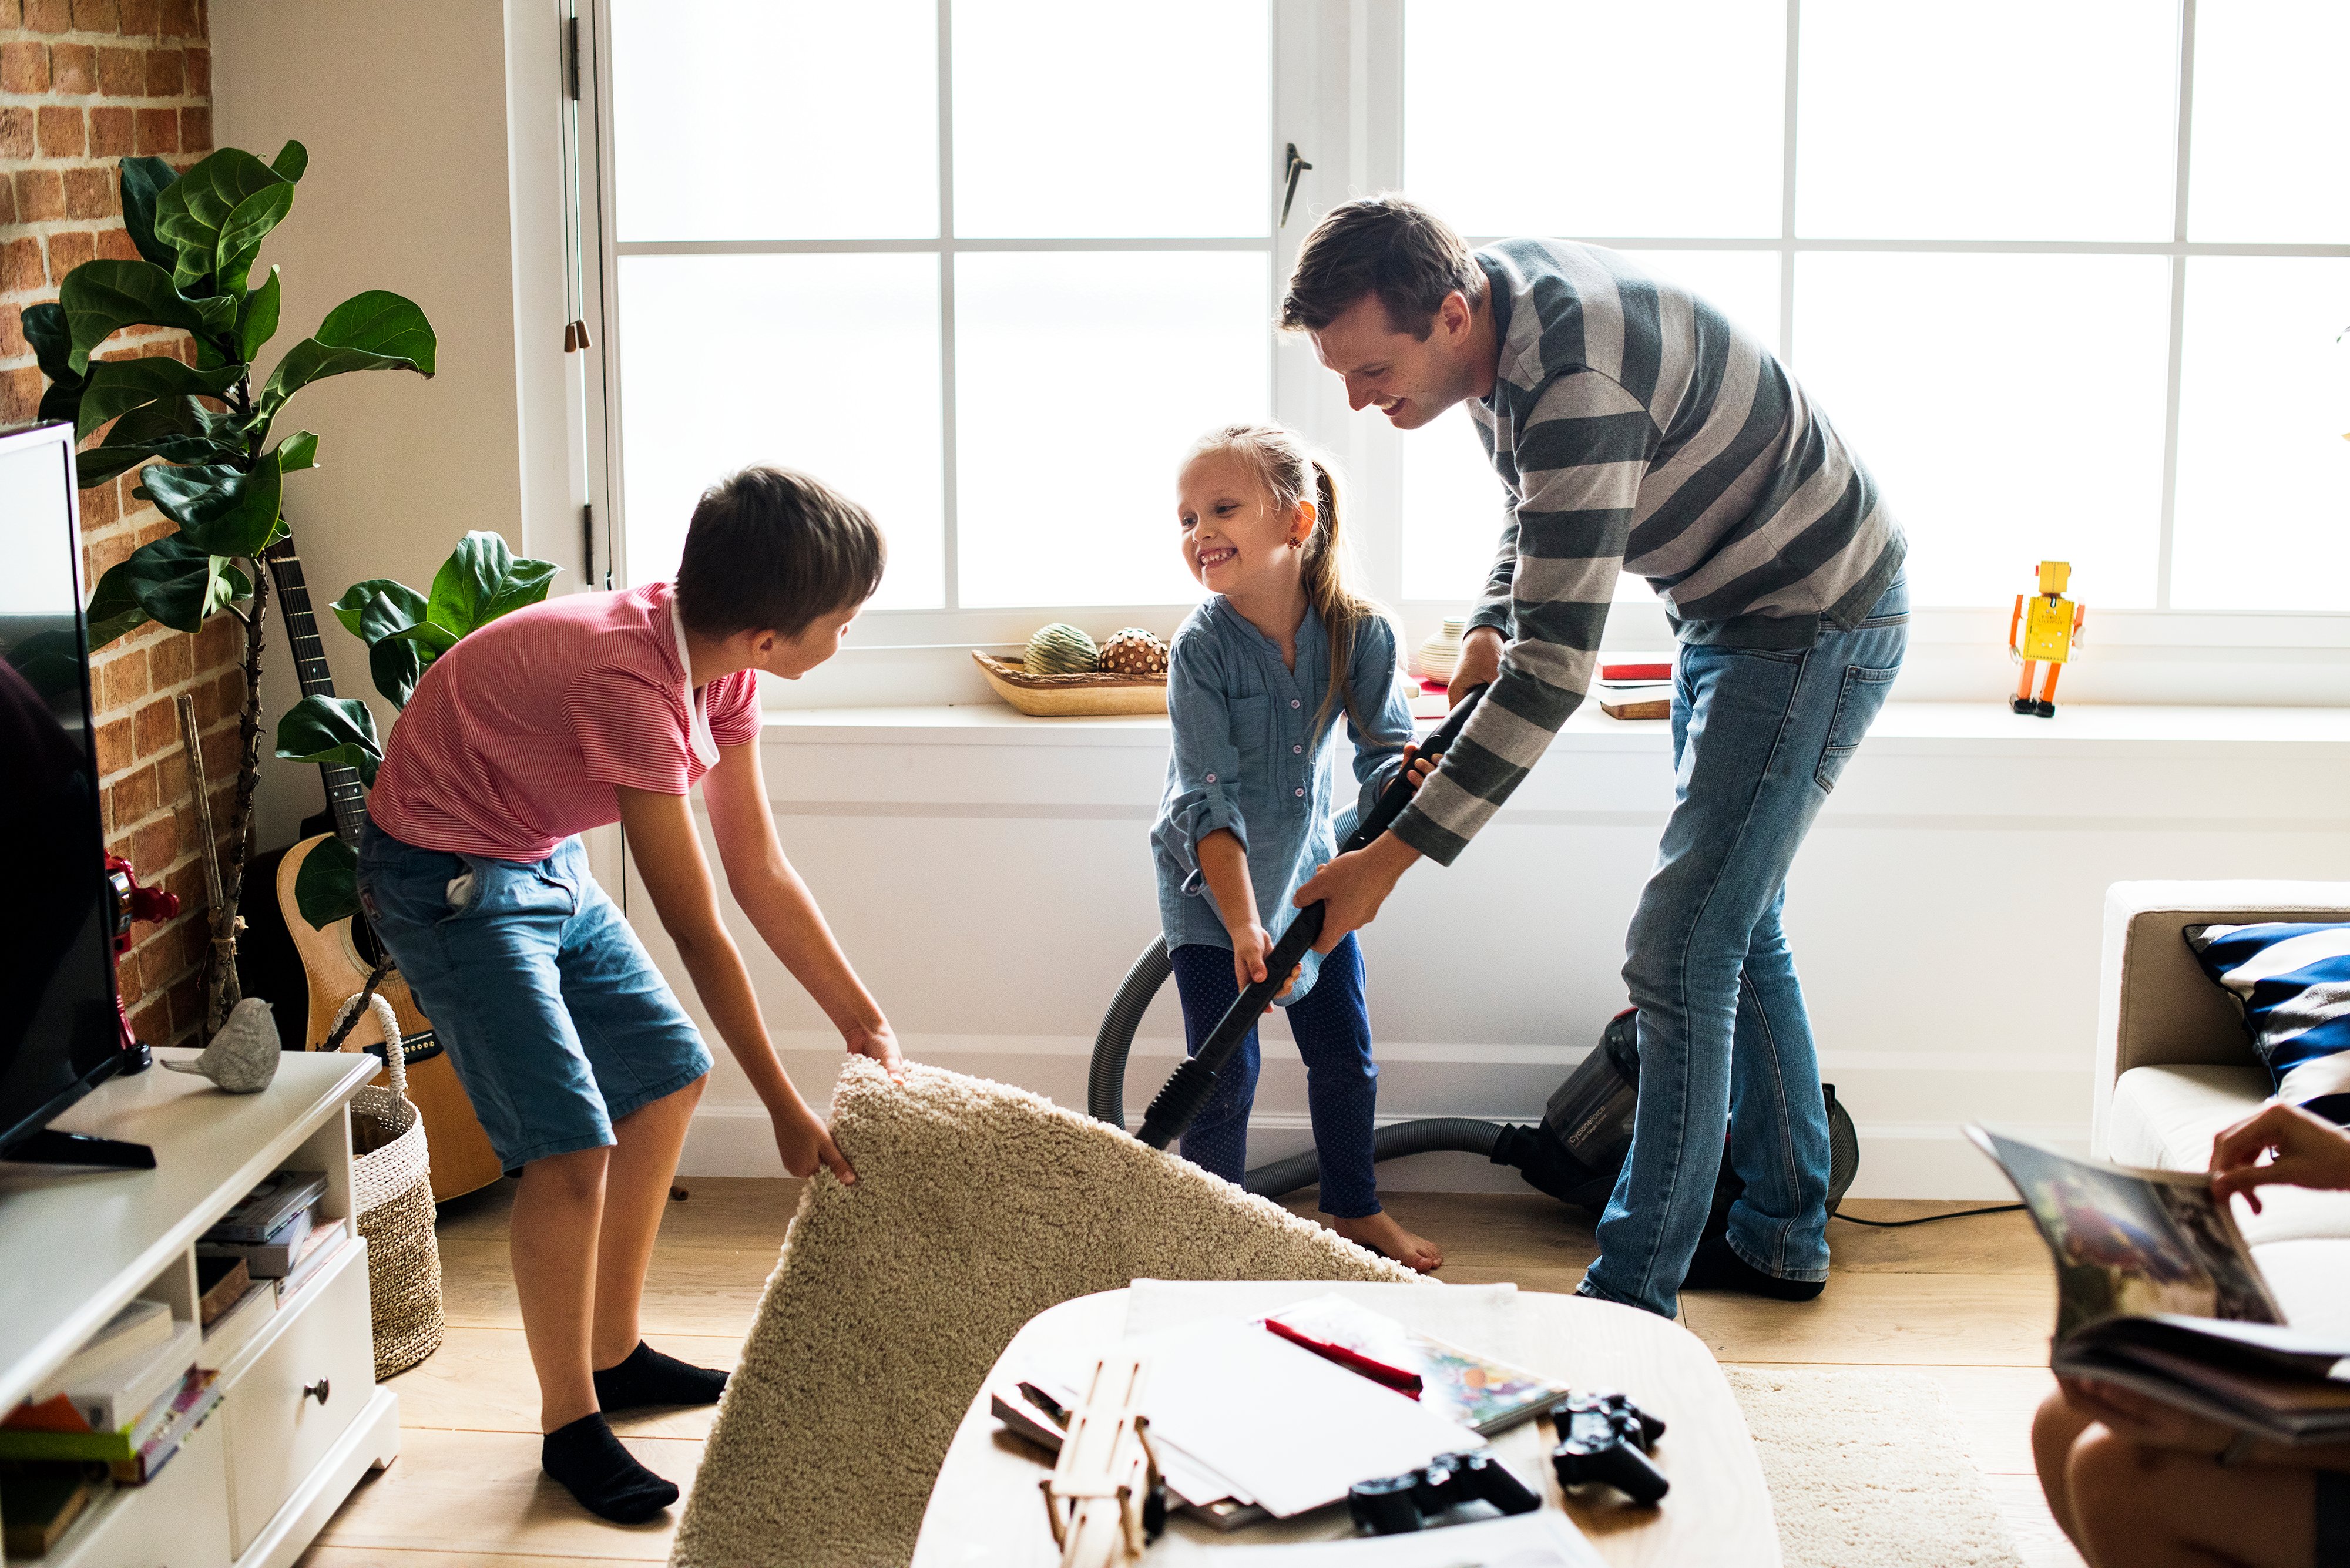 Padre e hijos limpian la casa. | Foto: Shutterstock